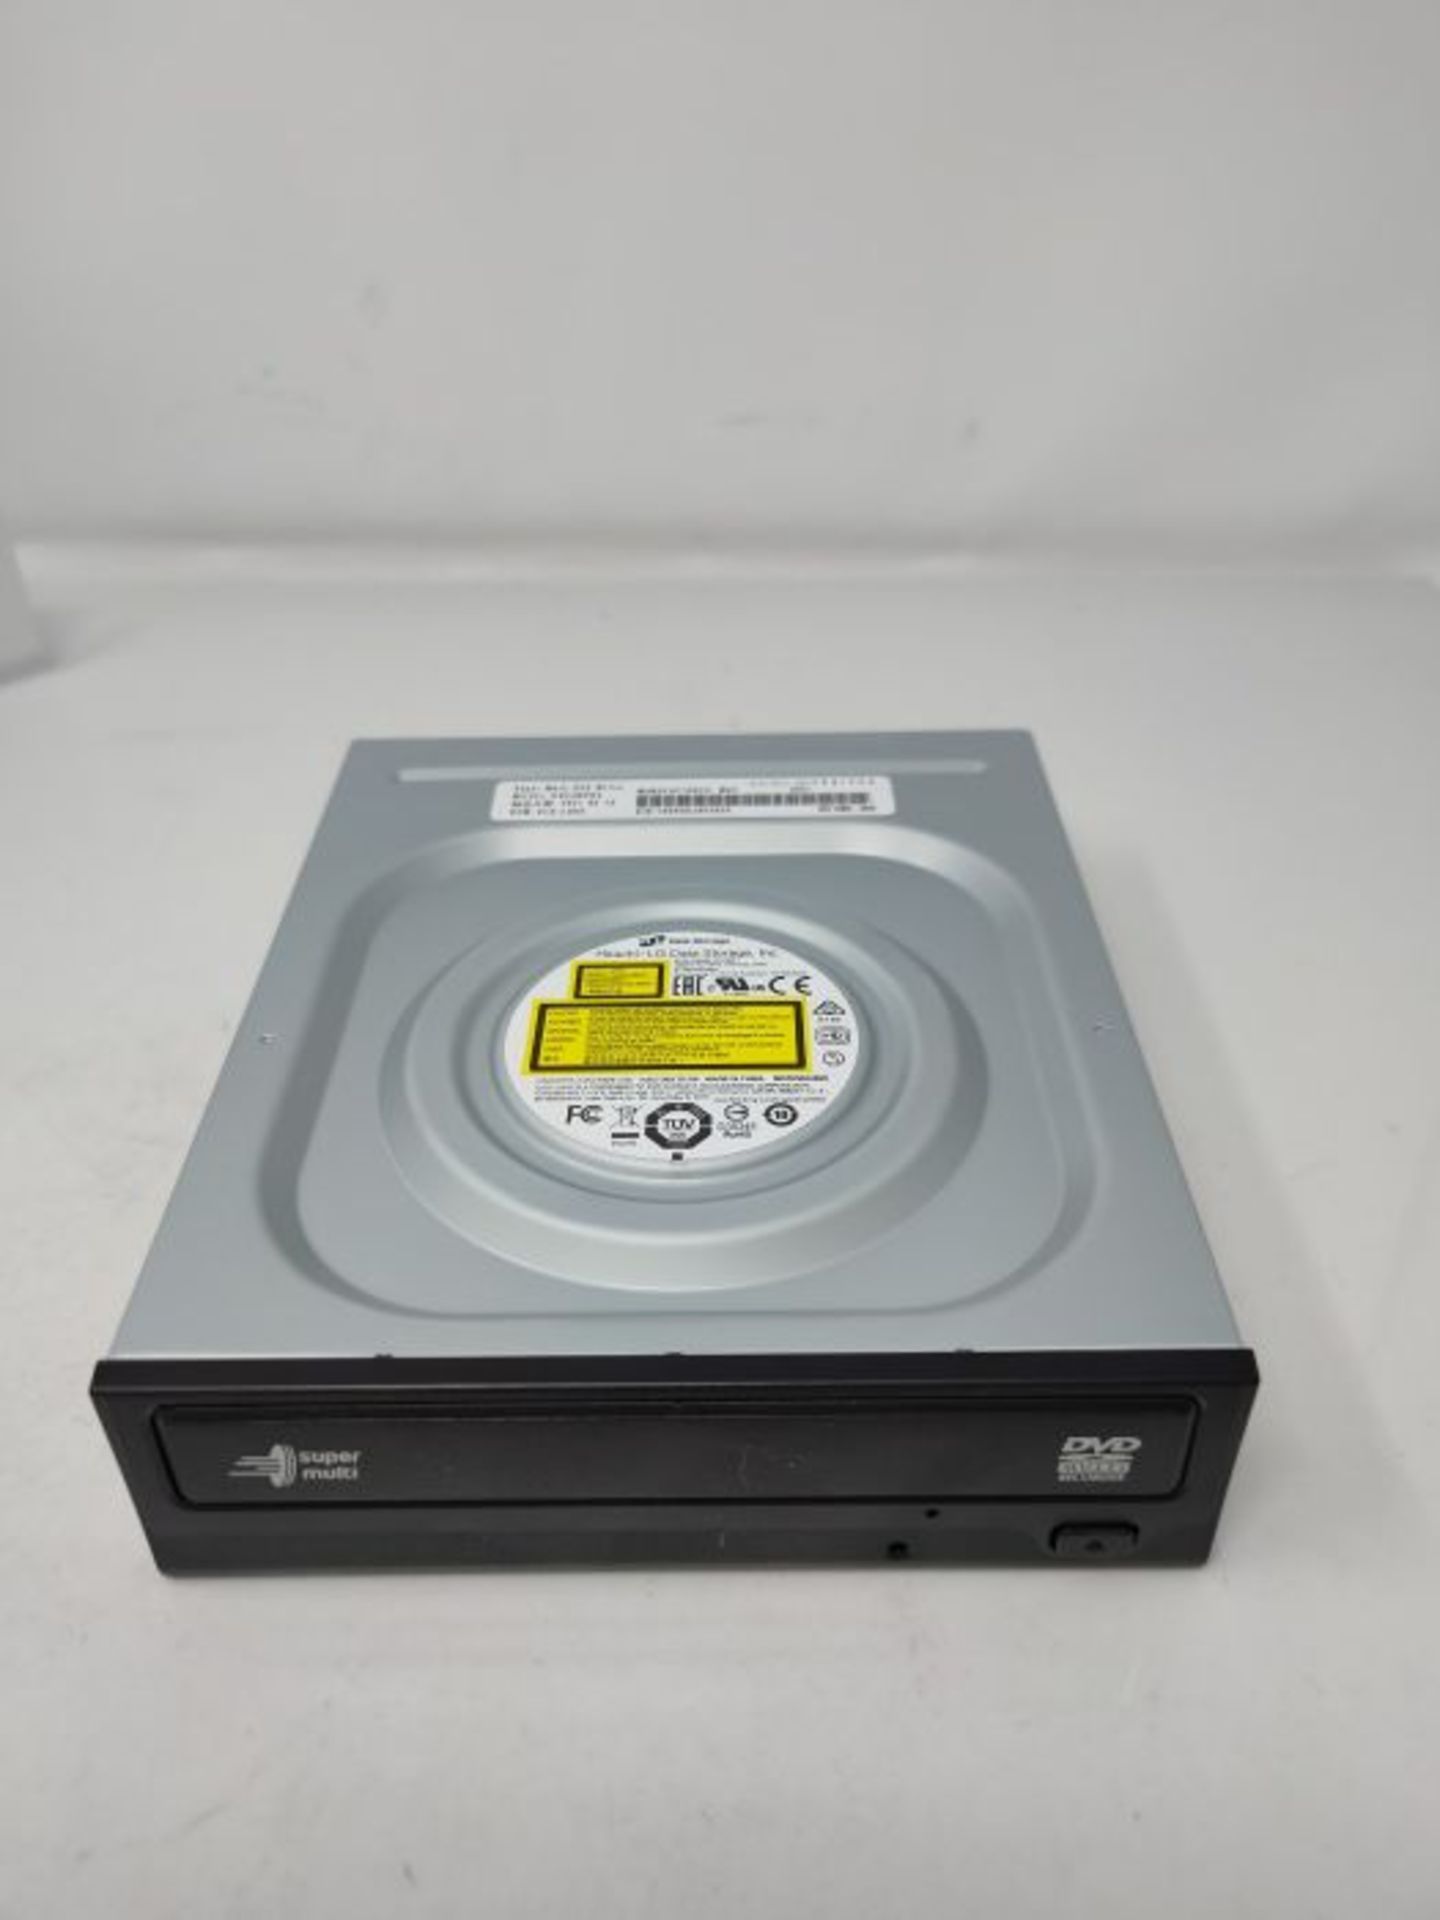 Hitachi-LG GH24 Internal DVD Drive, DVD-RW CD-RW ROM Rewriter for Laptop/Desktop PC, W - Image 3 of 3